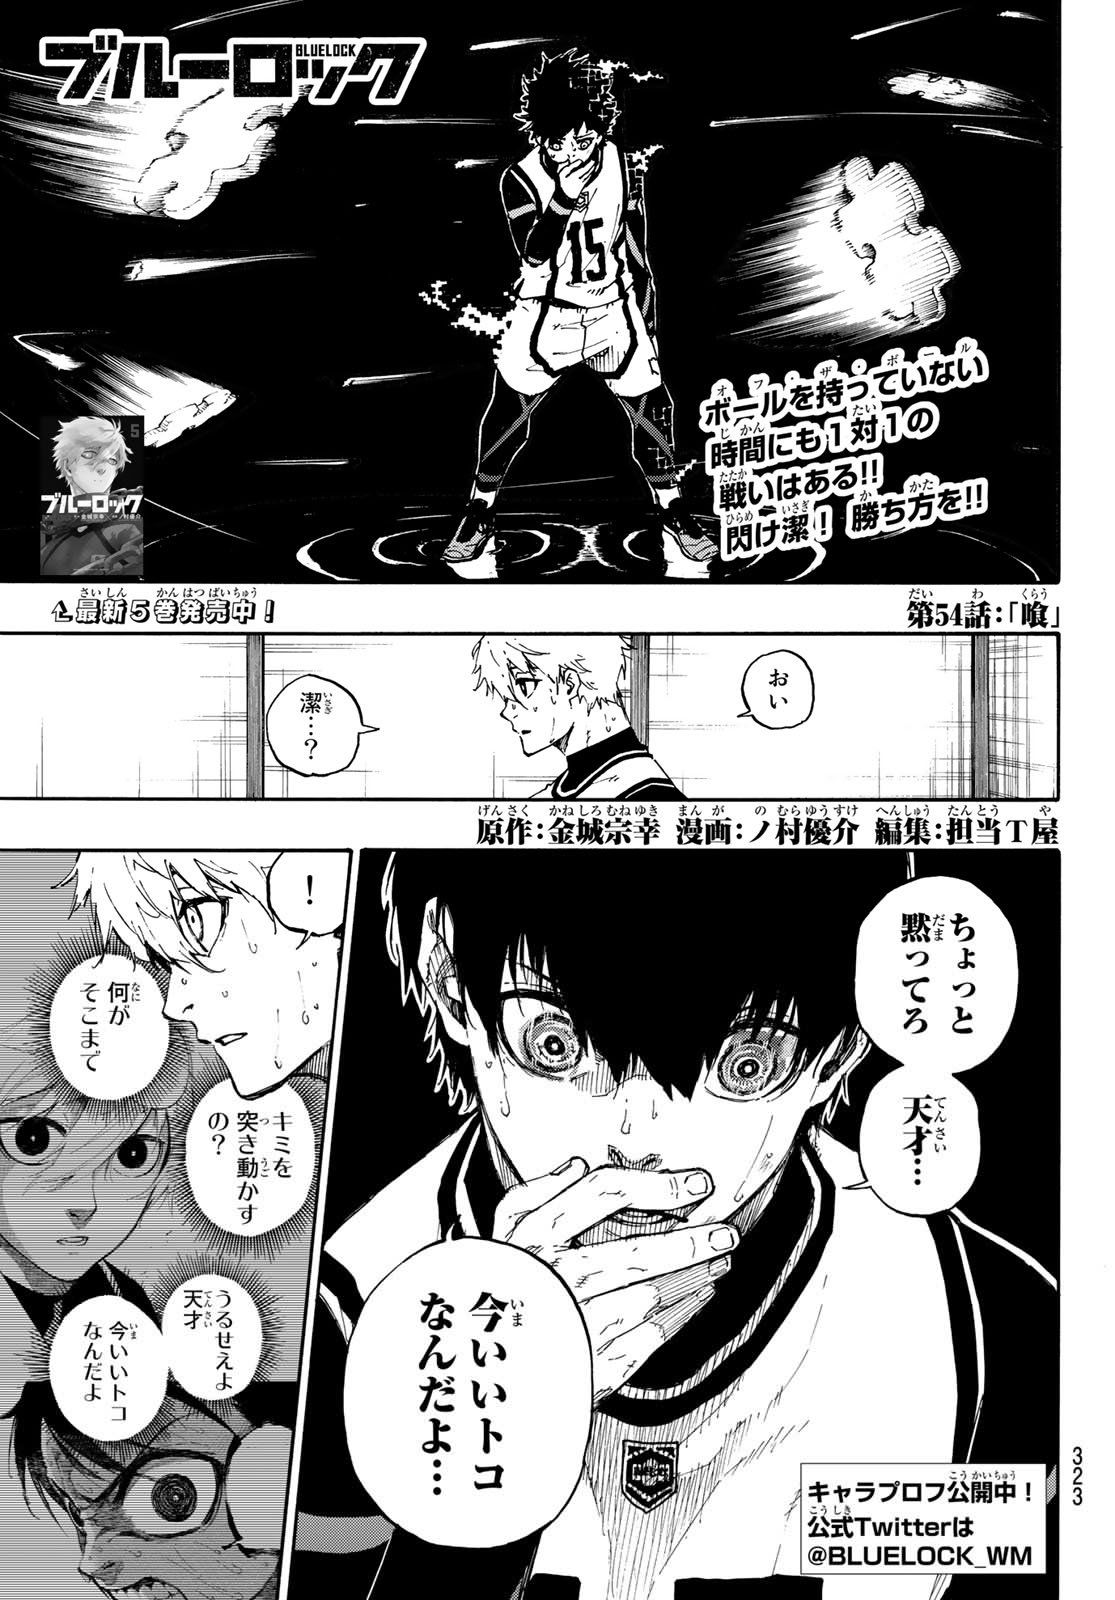 Blue Lock manga after episode 24: Where does the manga begins, explained